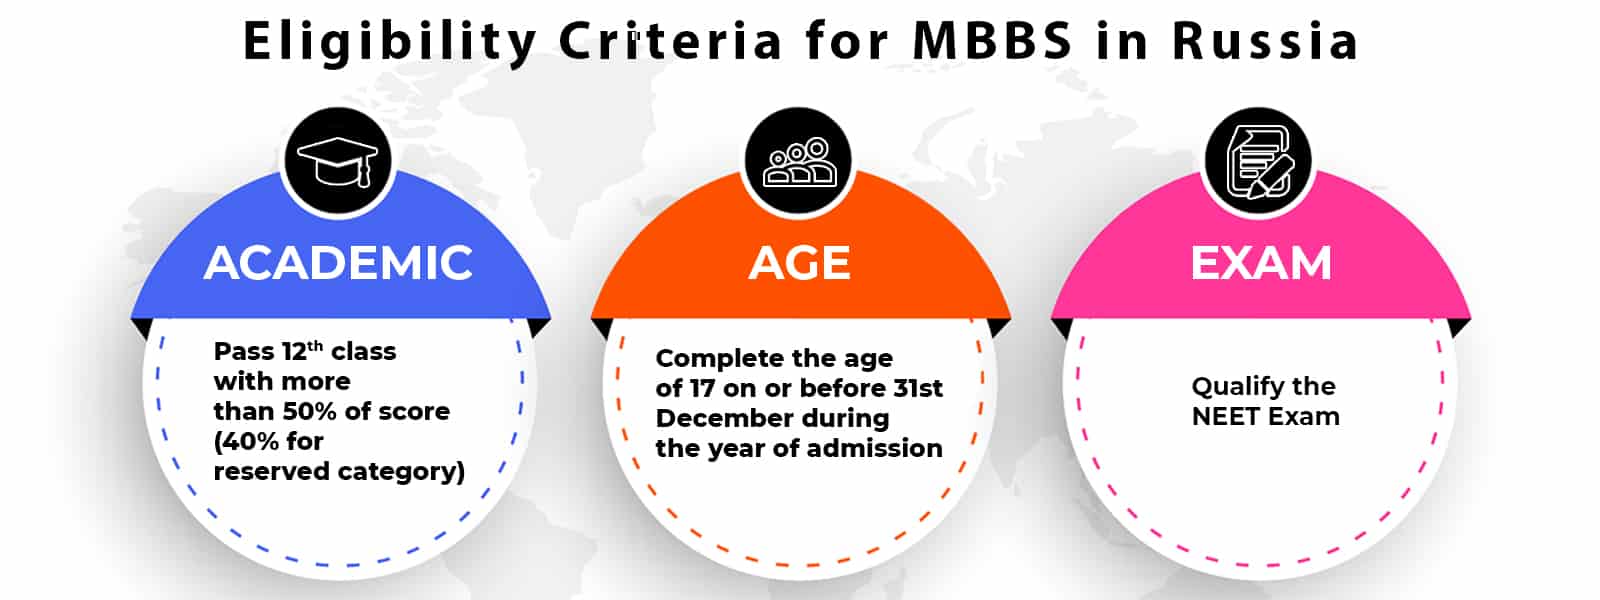 eligibility criteria for mbbs in russia